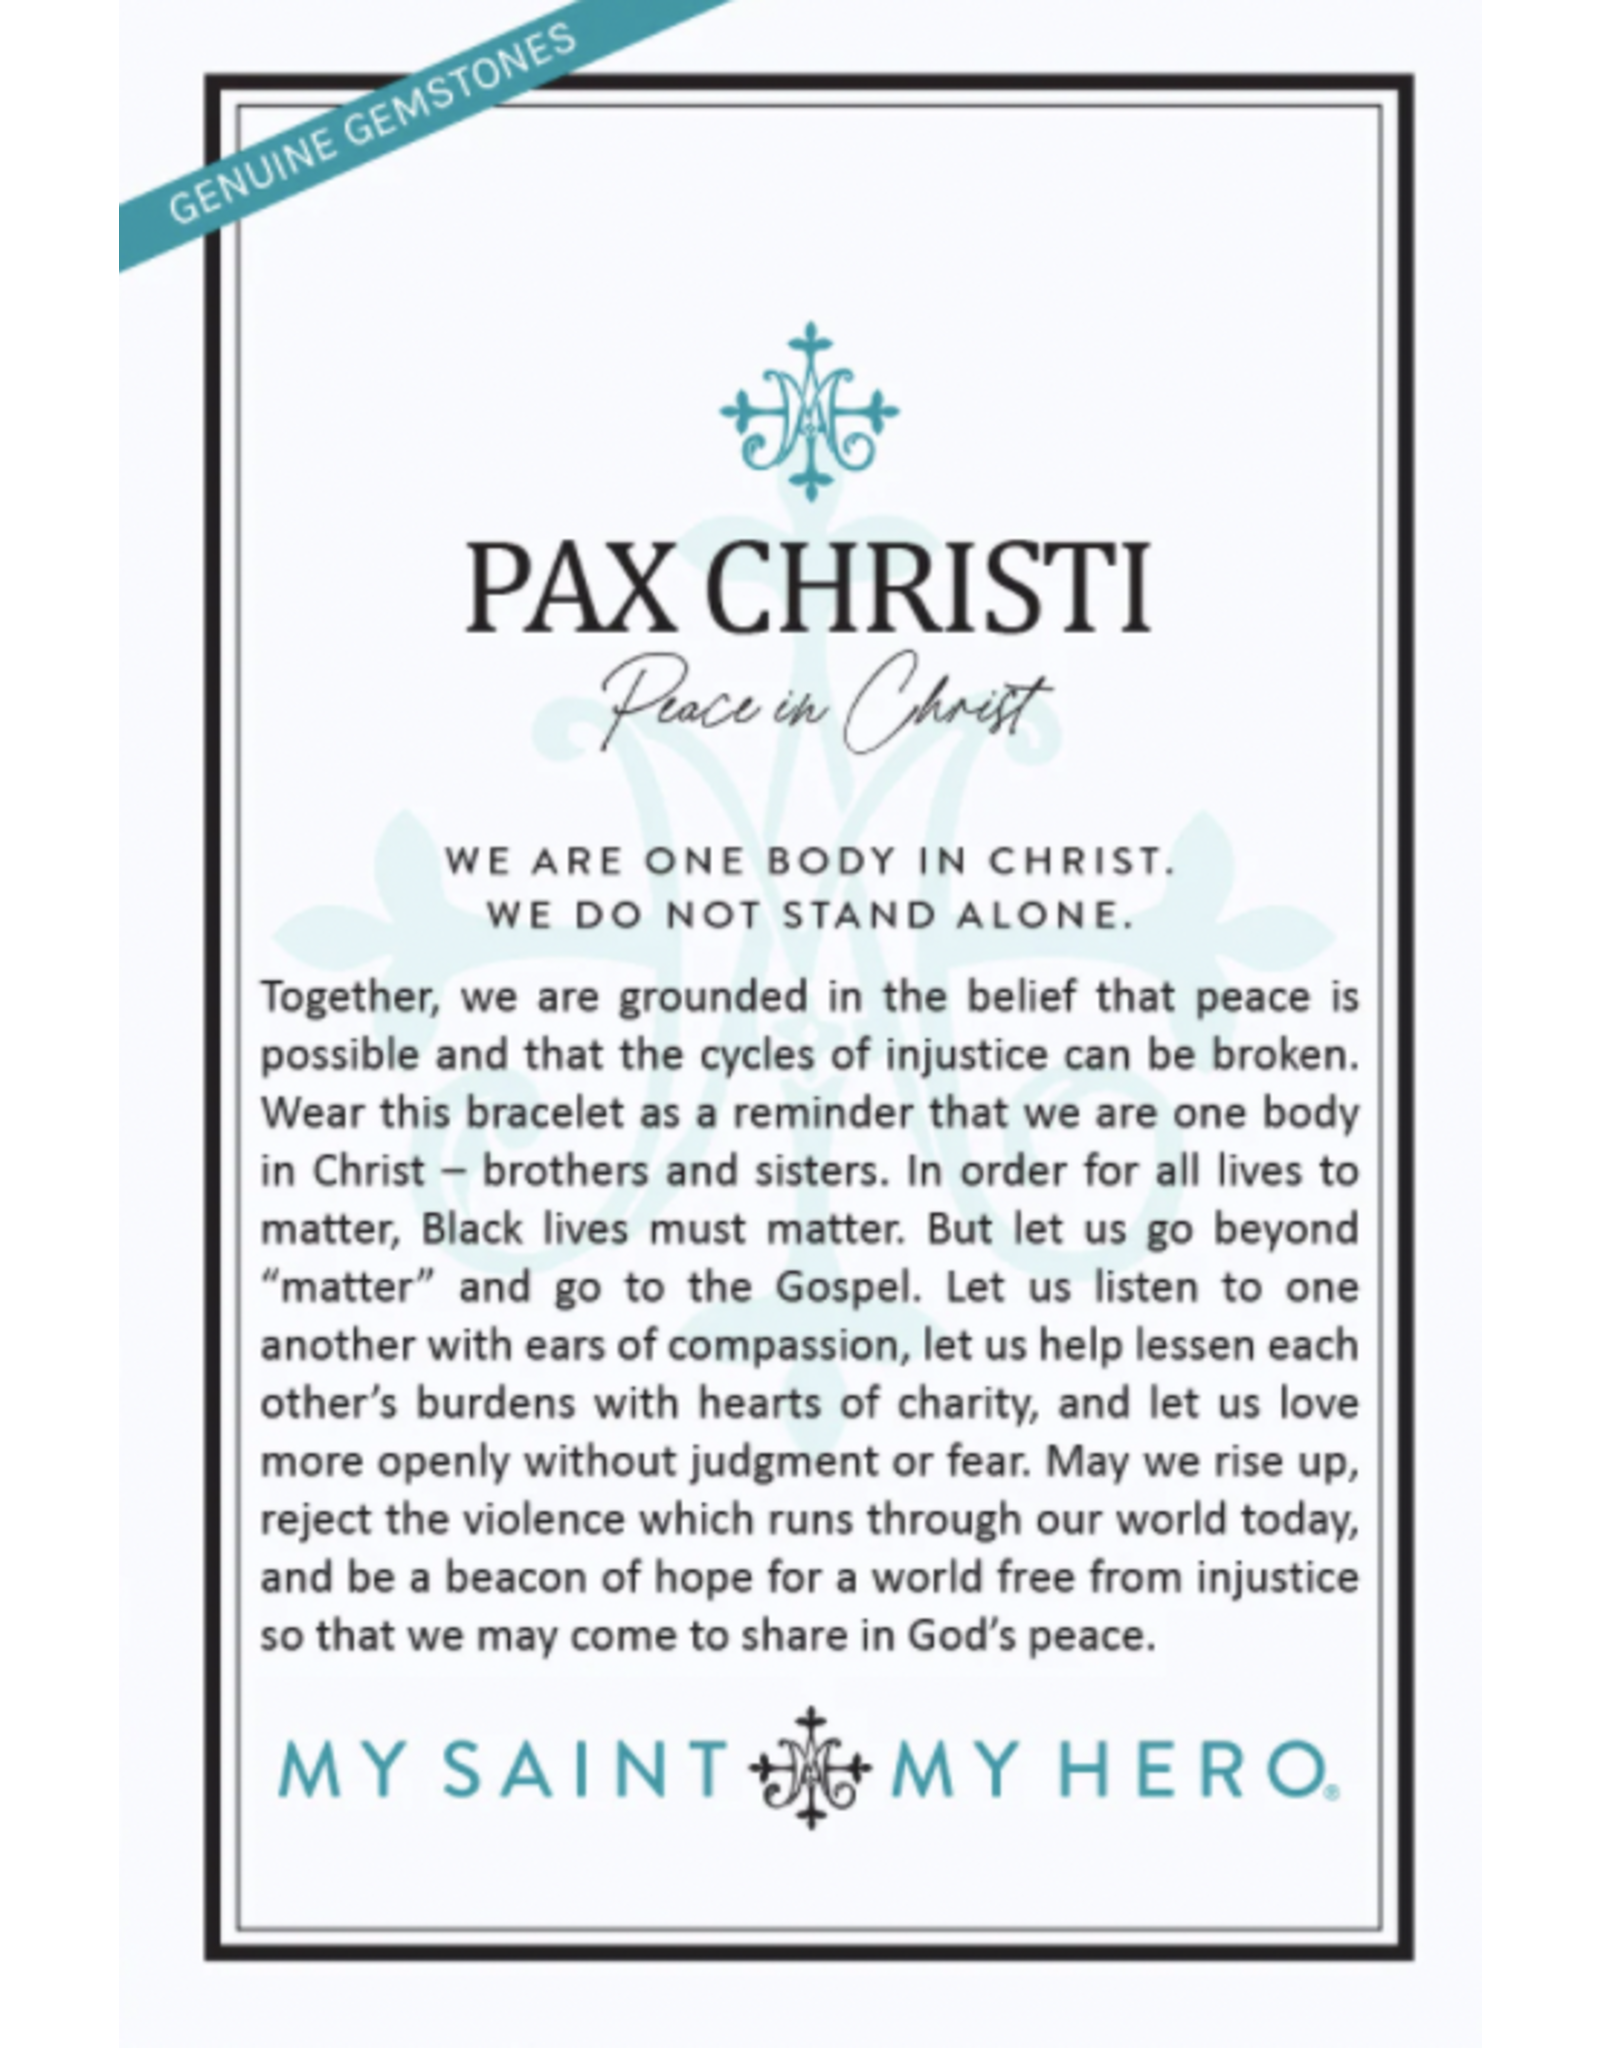 My Saint My Hero Bracelet - Pax Christi (Peace in Christ)